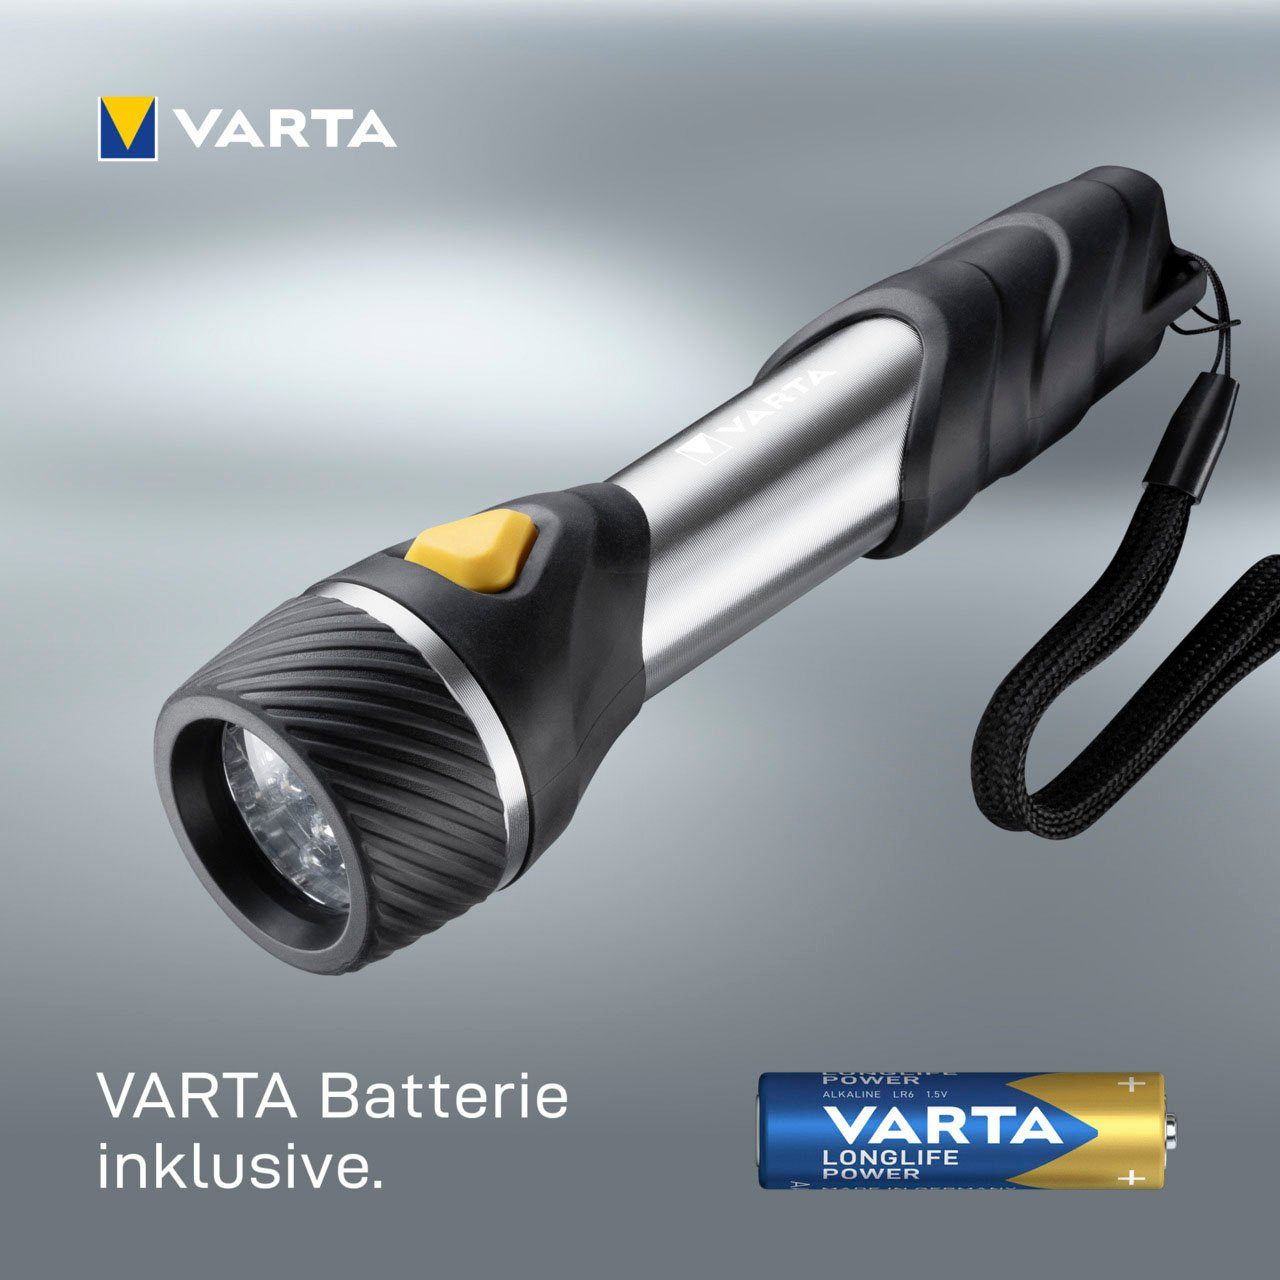 VARTA Taschenlampe VARTA Day 5 mit Multi LED Taschenlampe LEDs Light F10